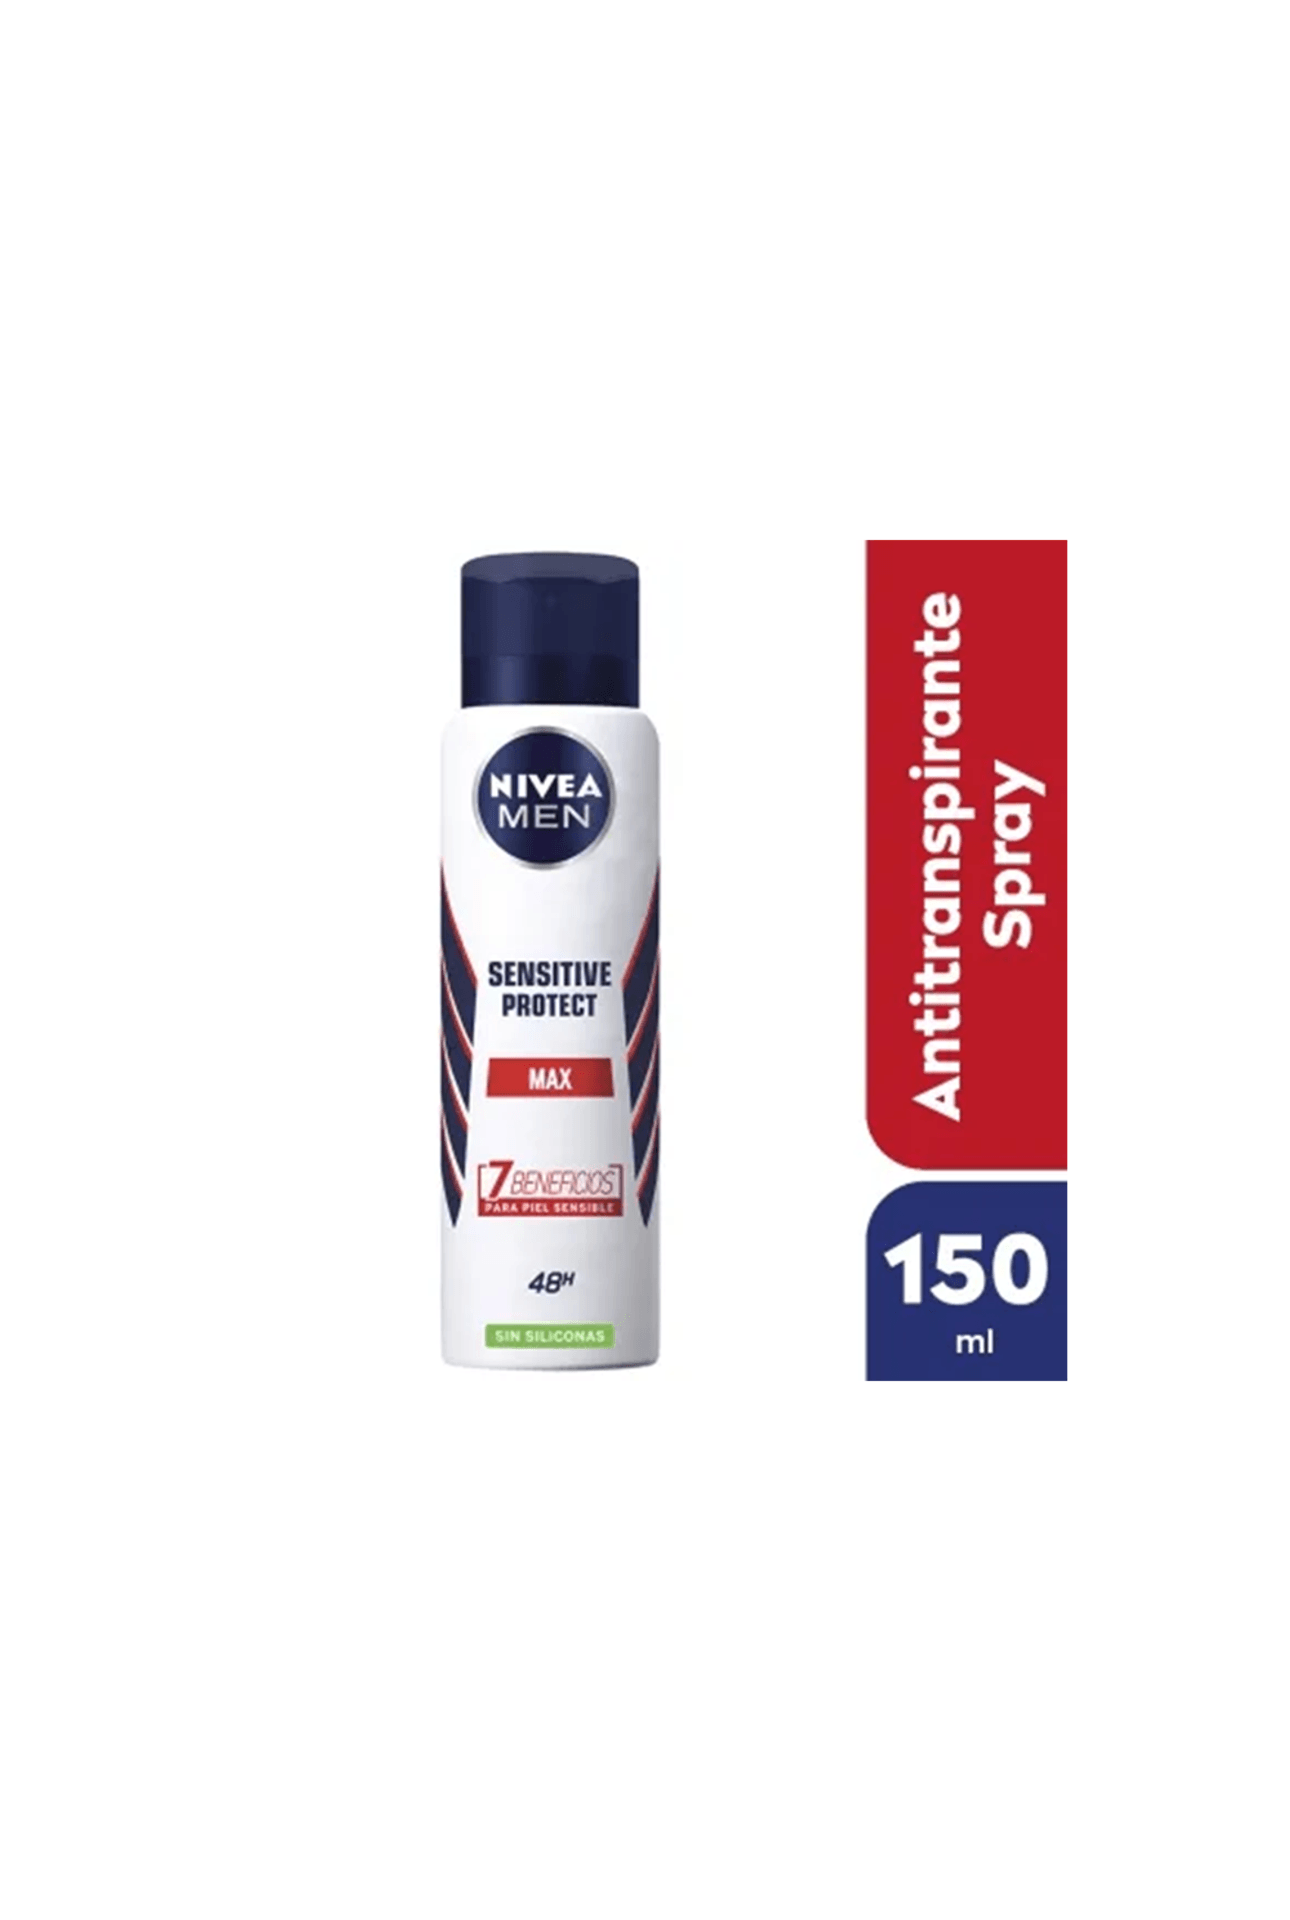 Nivea-Desodorante-Nivea-Men-Sensitive-Protect-Max-x-150ml-4005900929150_img1